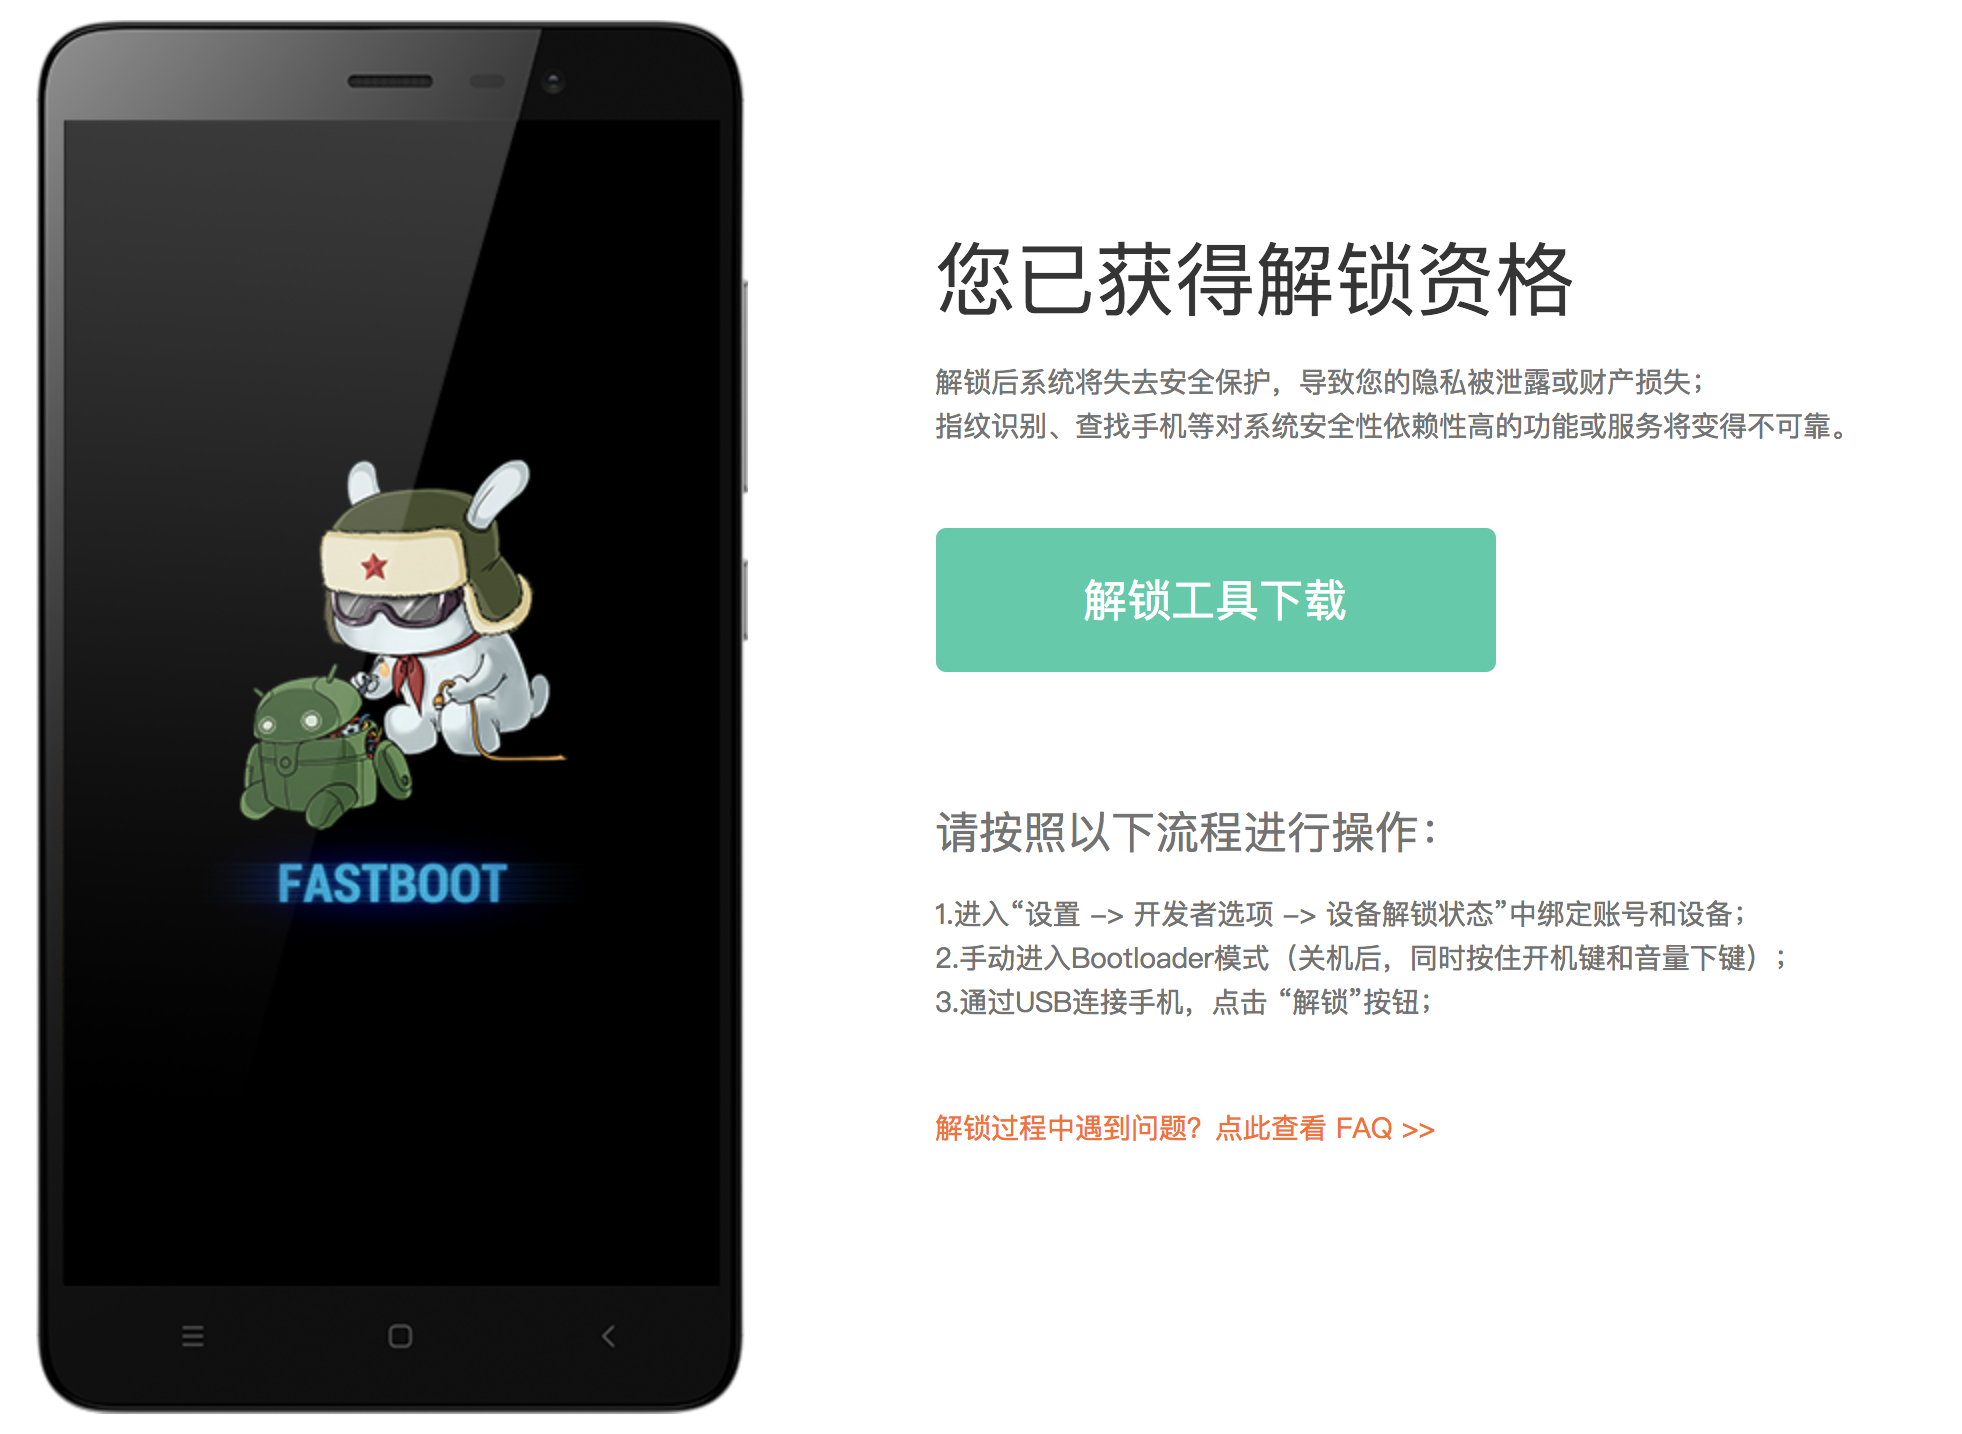 Redmi note 8 fastboot. Что такое Fastboot на редми 9. Кролик Xiaomi Fastboot. FACEBOT Xiaomi. Fastboot Xiaomi что это такое.